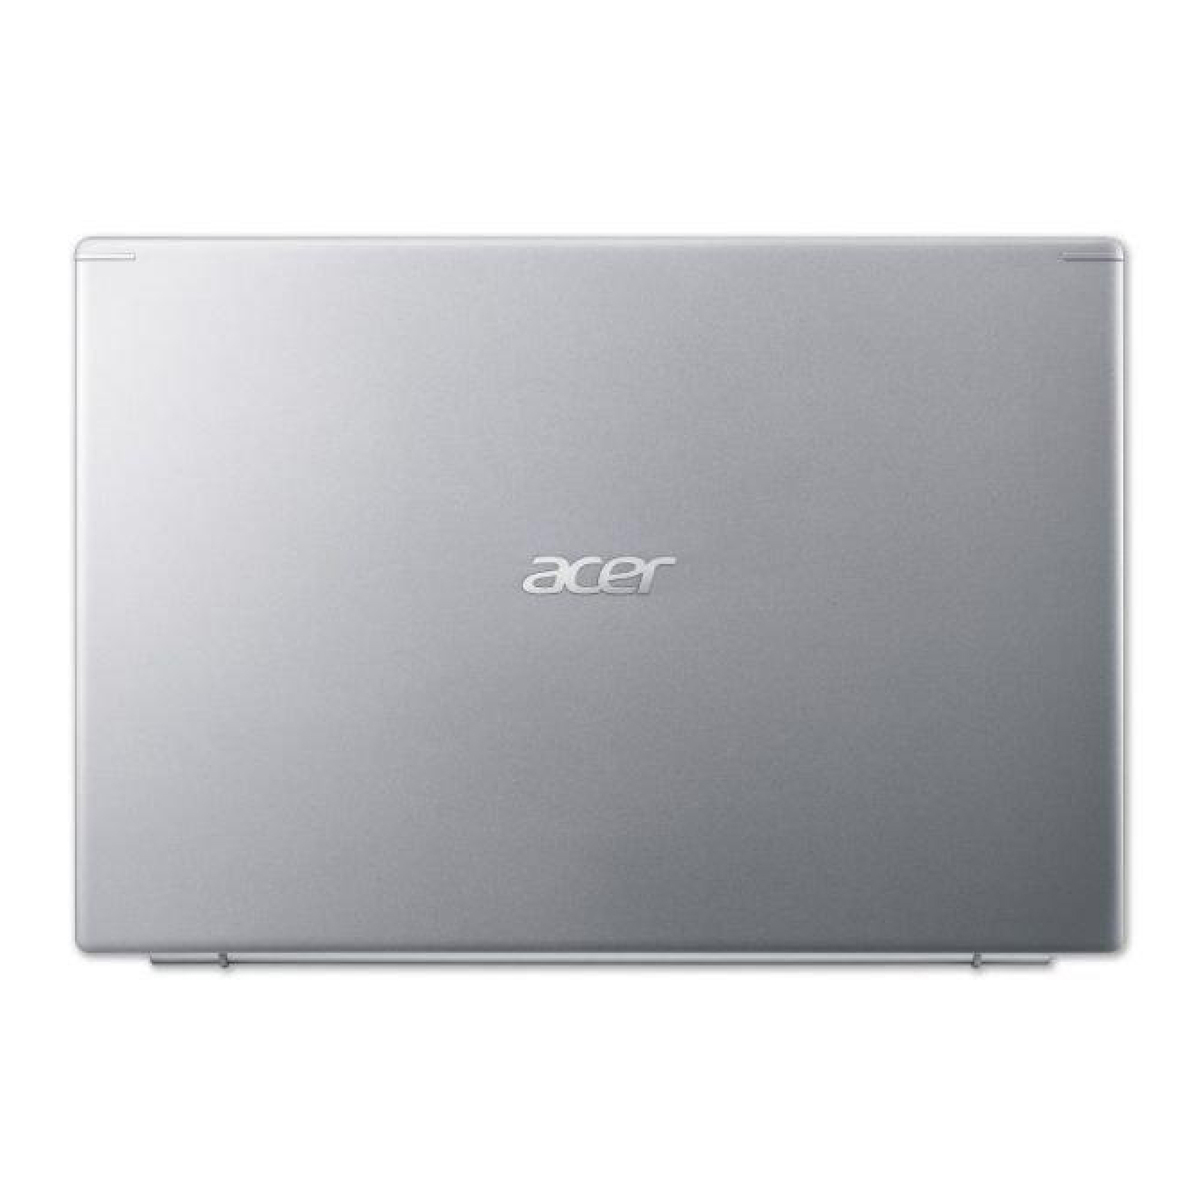 Acer Aspire 5 (NXA21EM009) Core i7-1165G7,12GBRAM, 512GBSSD,NVIDIA® GeForce® MX350, Windows 11Home, 14inch FHD Silver